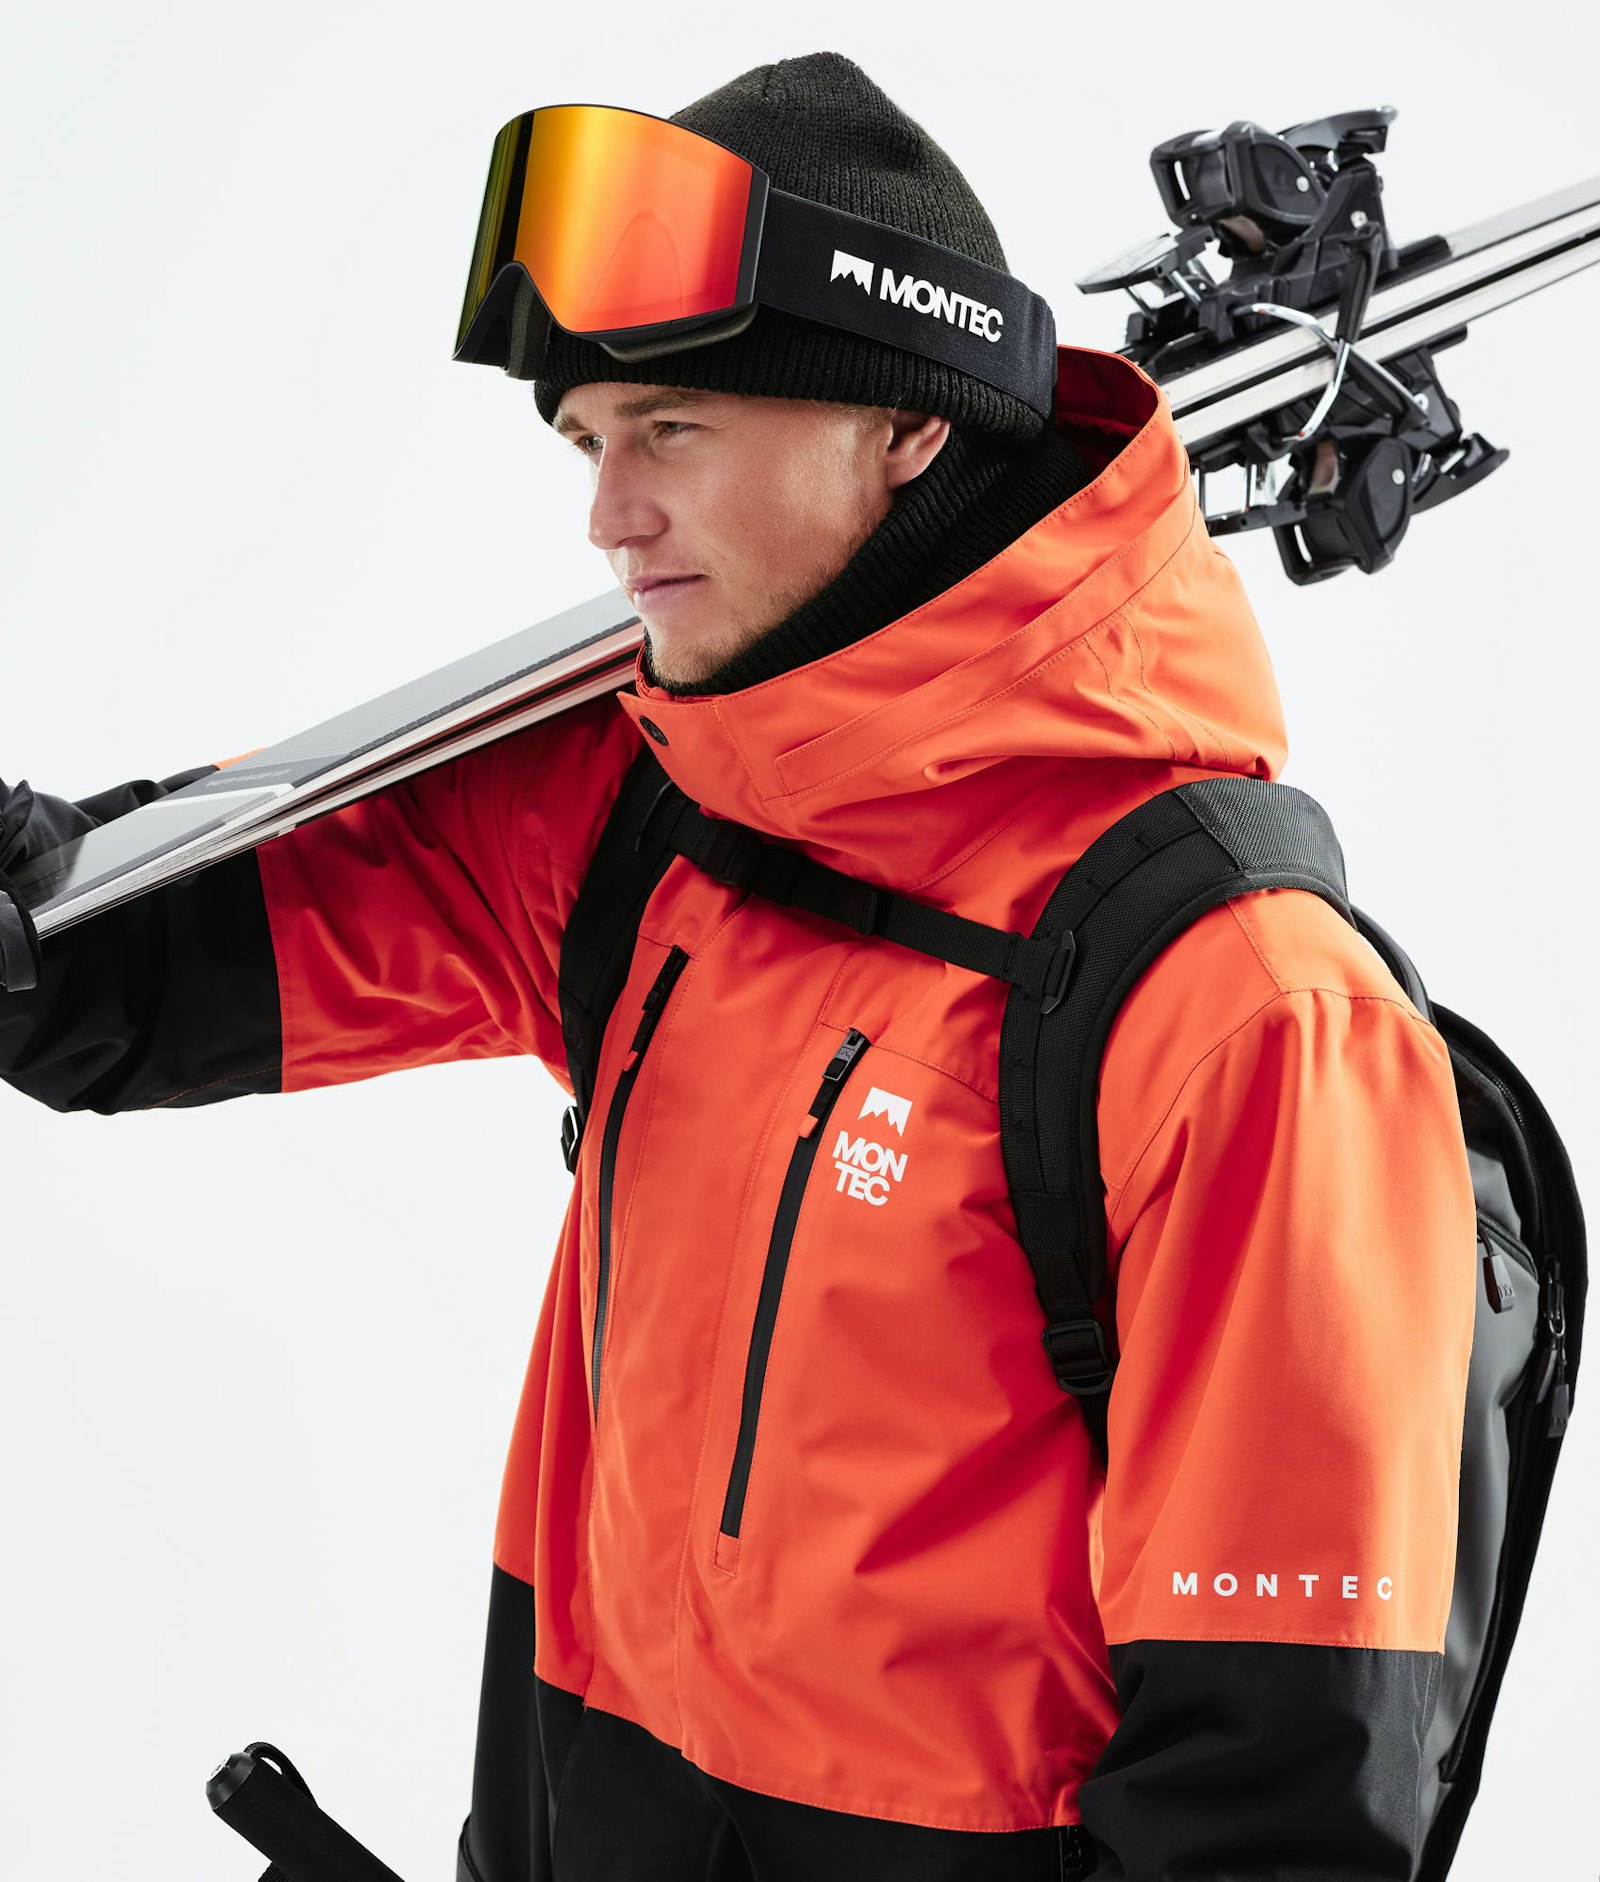 Fawk 2021 Skijakke Herre Orange/Black